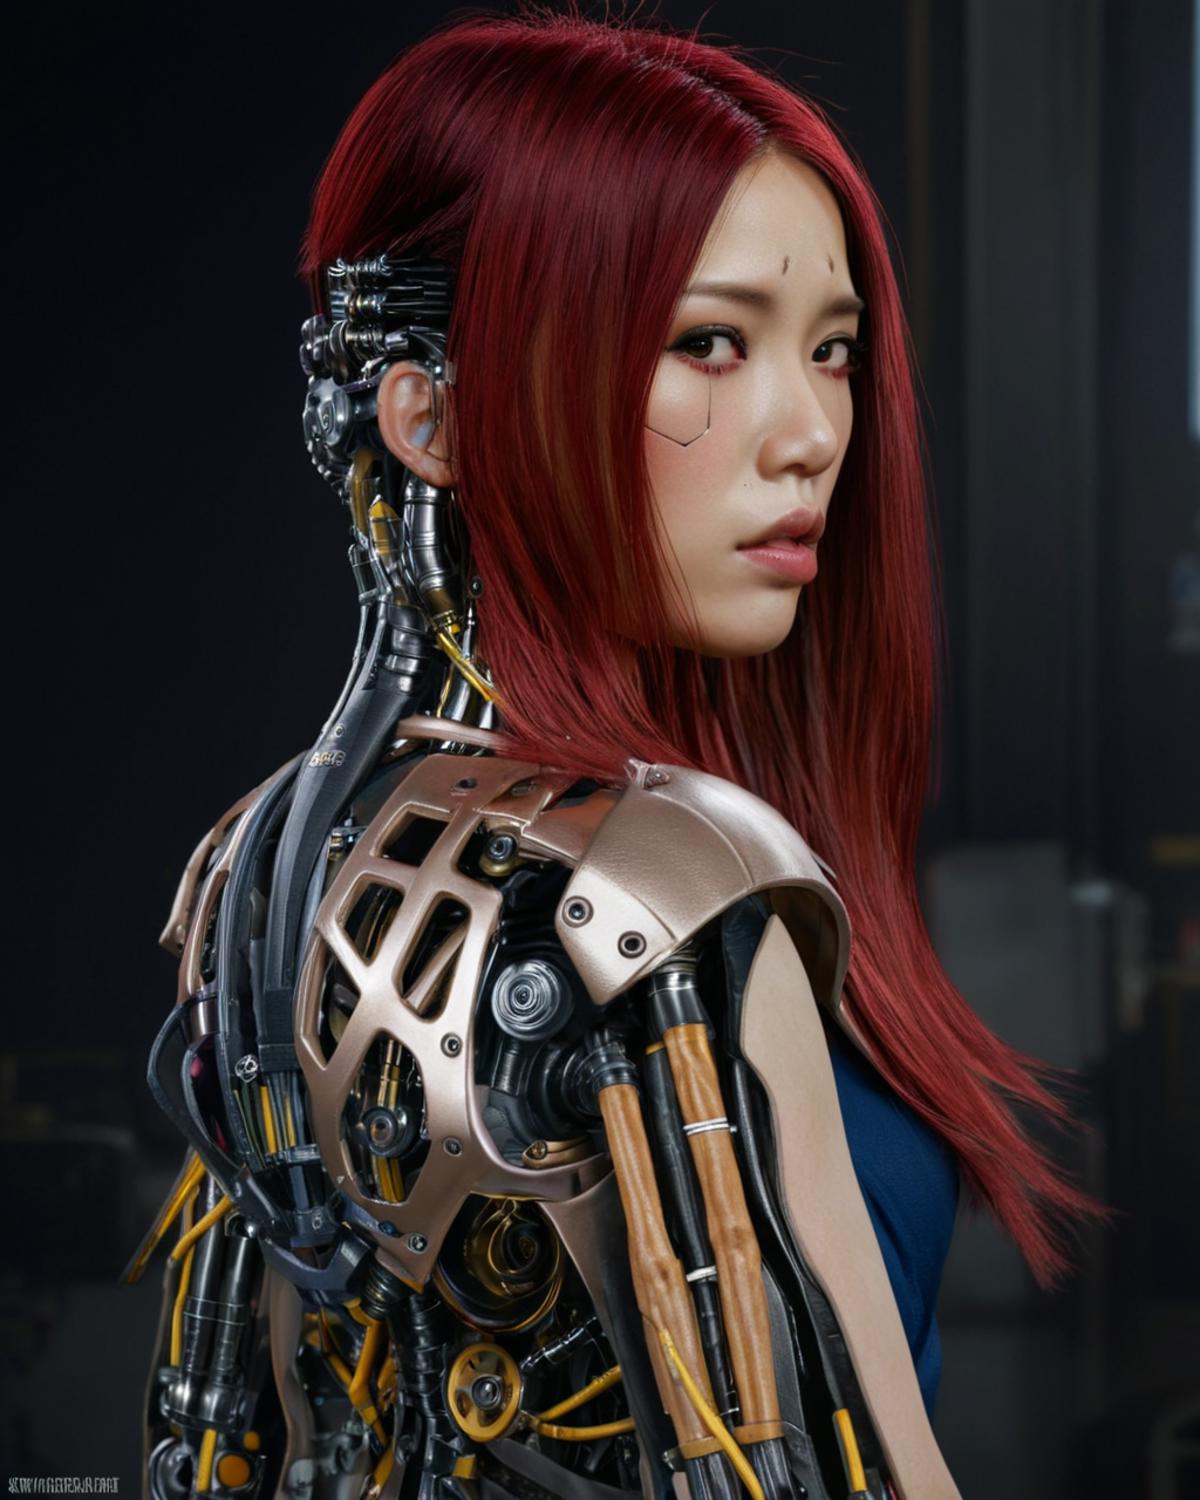 AI model image by KimWithDaPuss